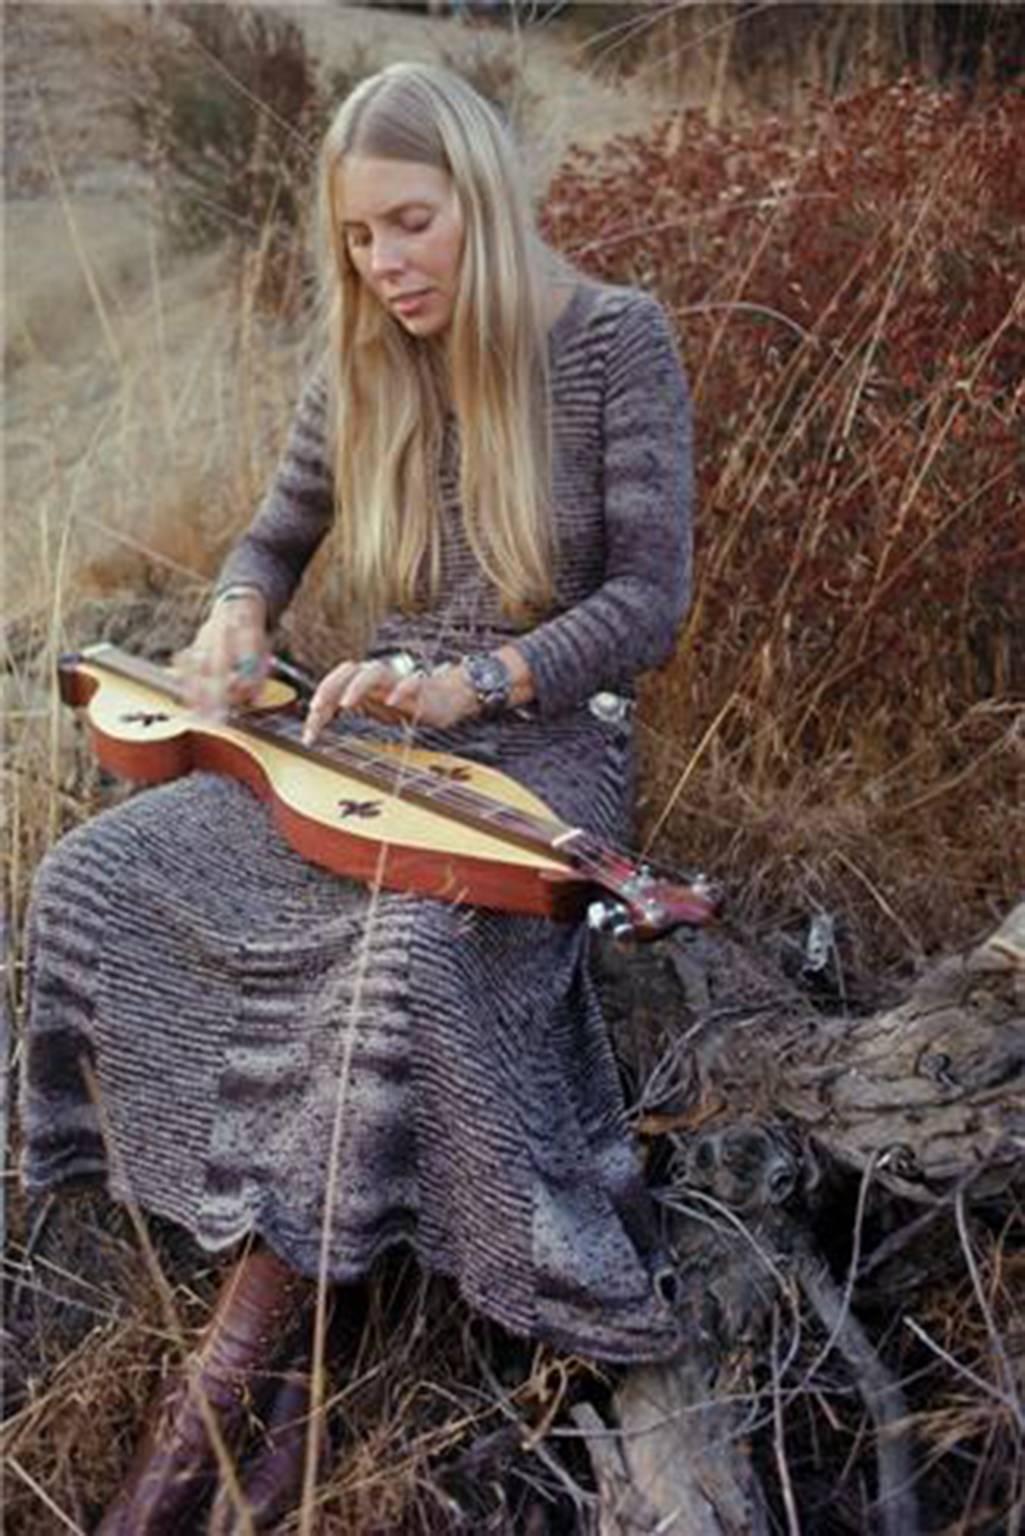 Joni Mitchell in Laurel Canyon, 1970